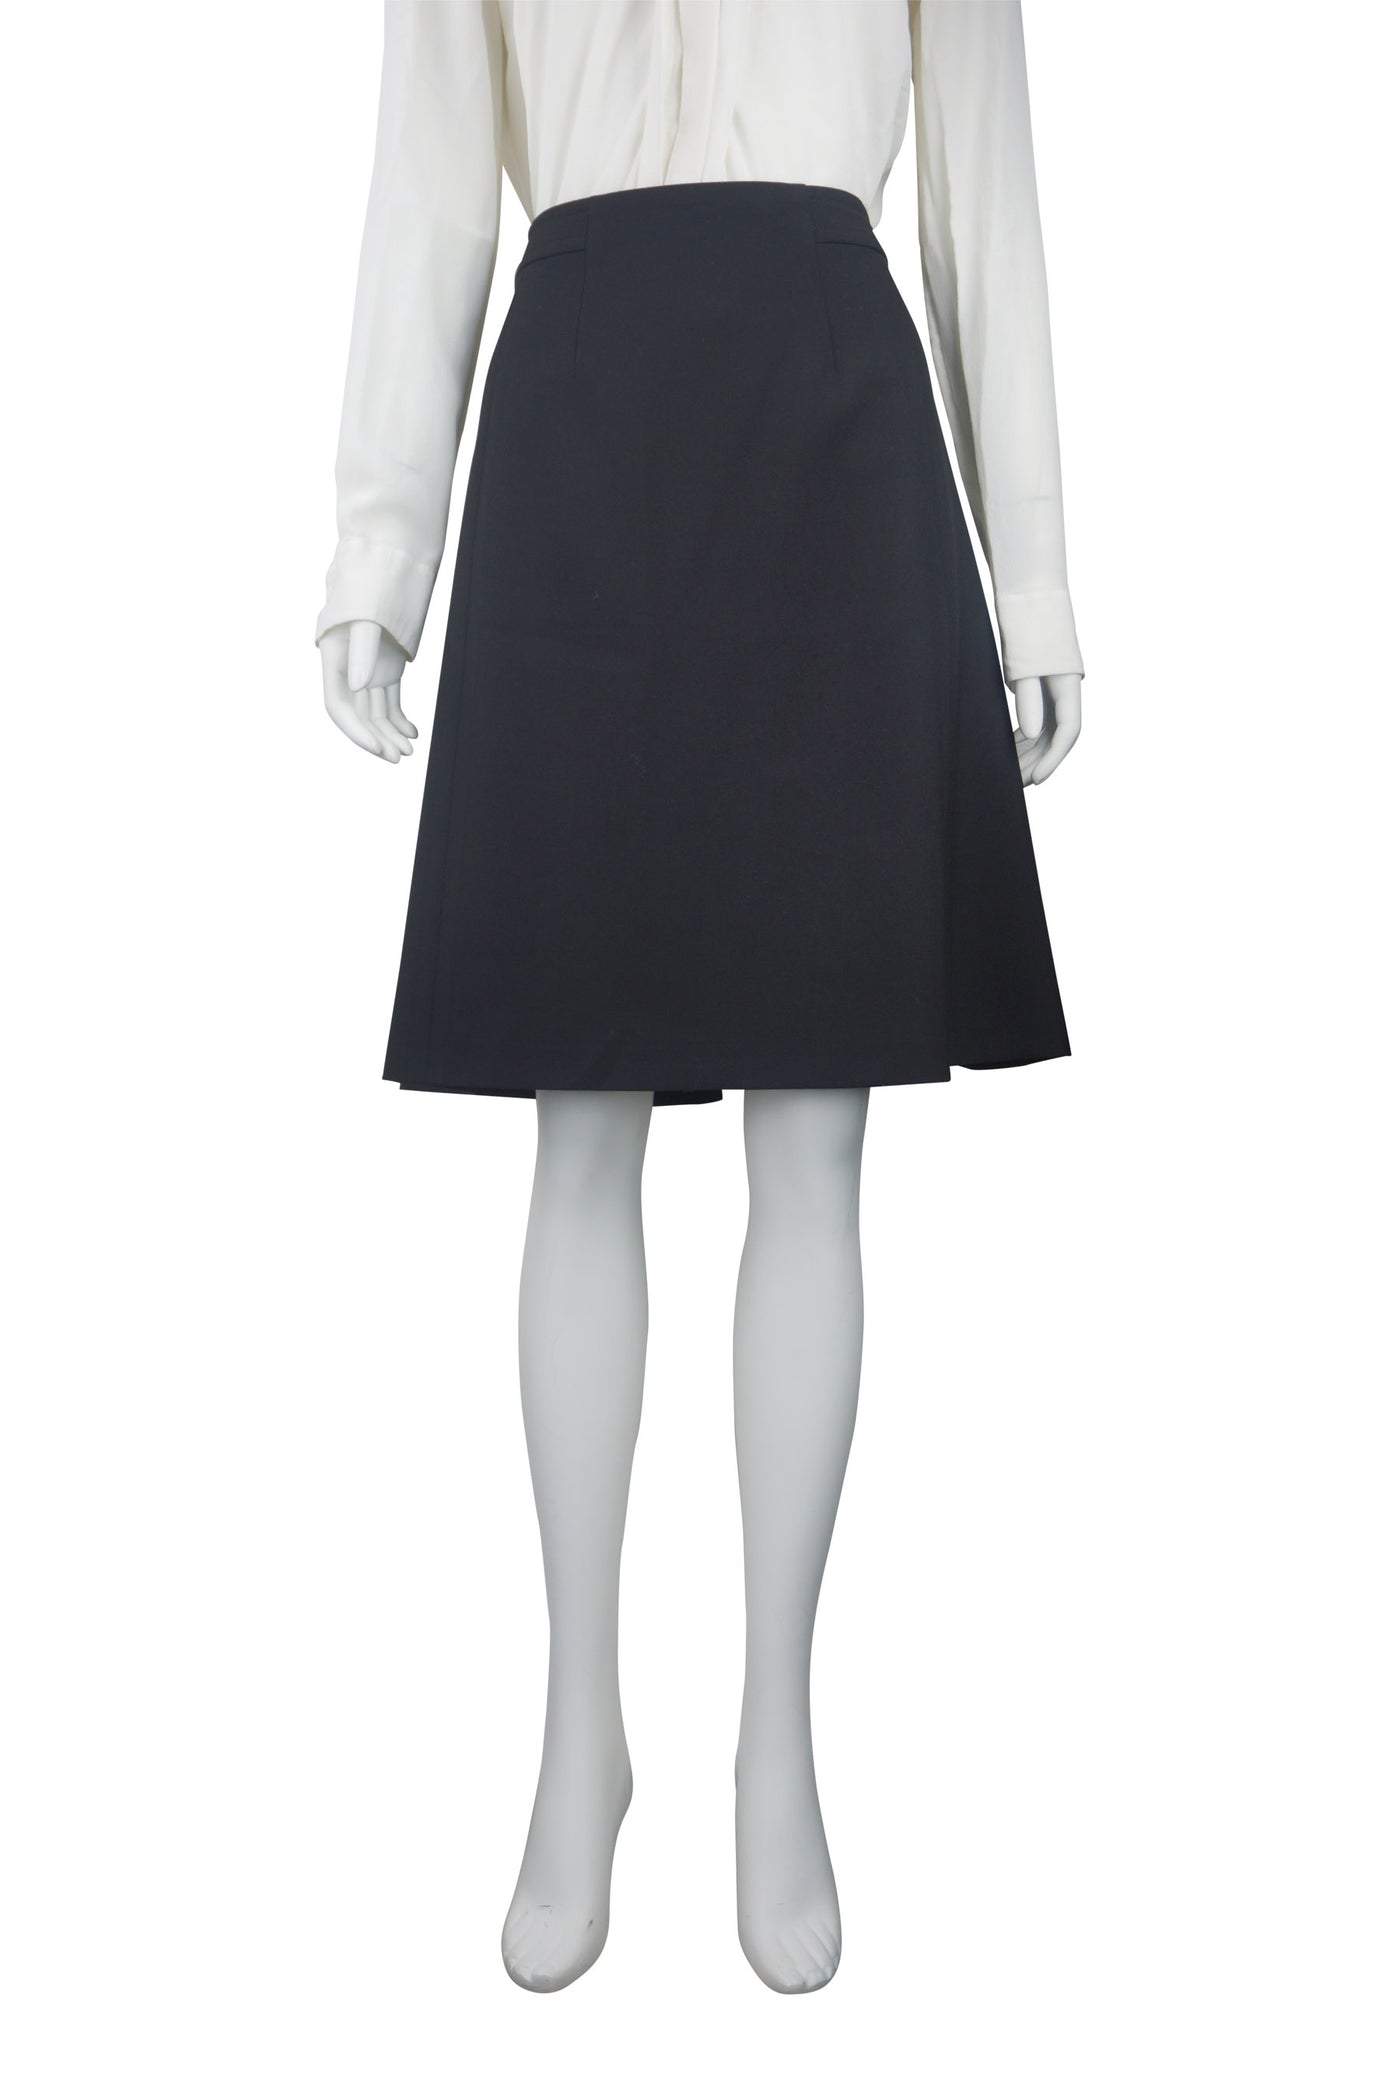 A-line black skirt